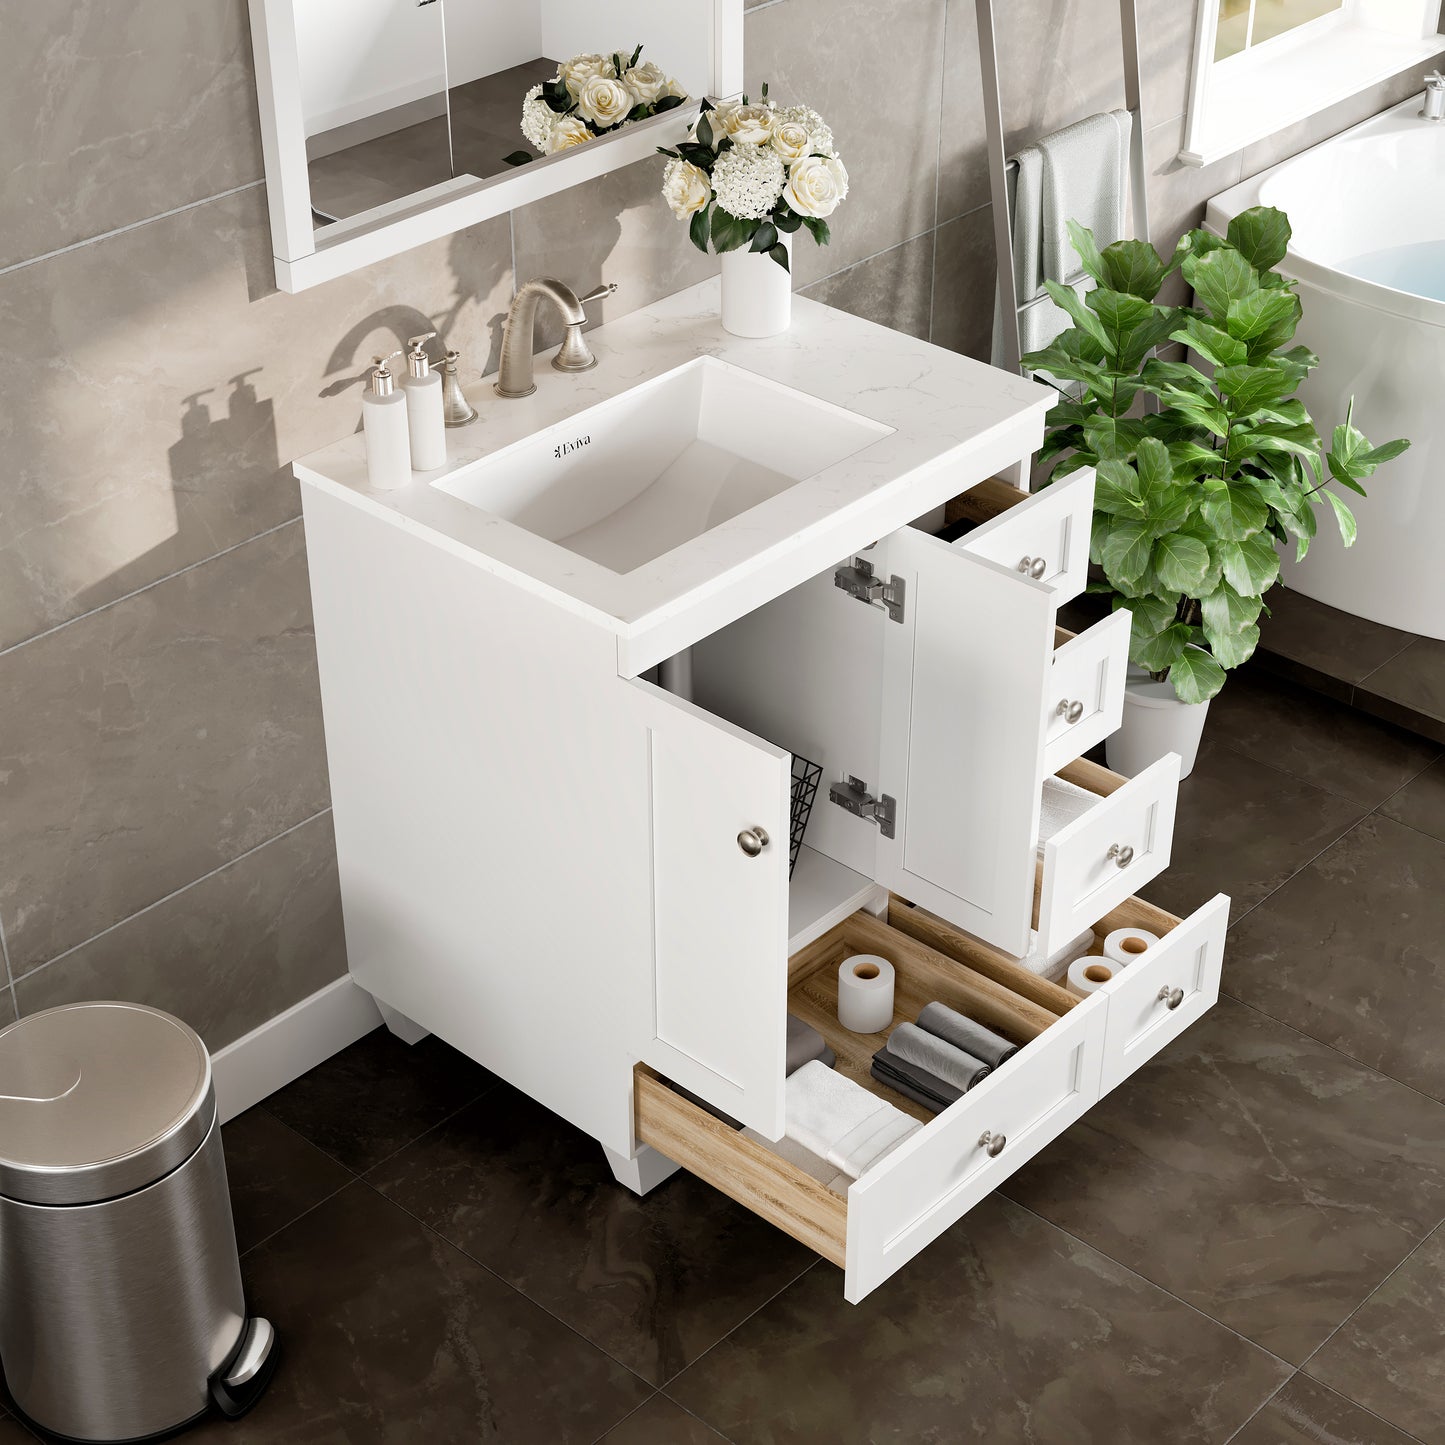 Acclaim 28"W x 22"D White Bathroom Vanity with Carrara Quartz Countertop and Undermount Porcelain Sink